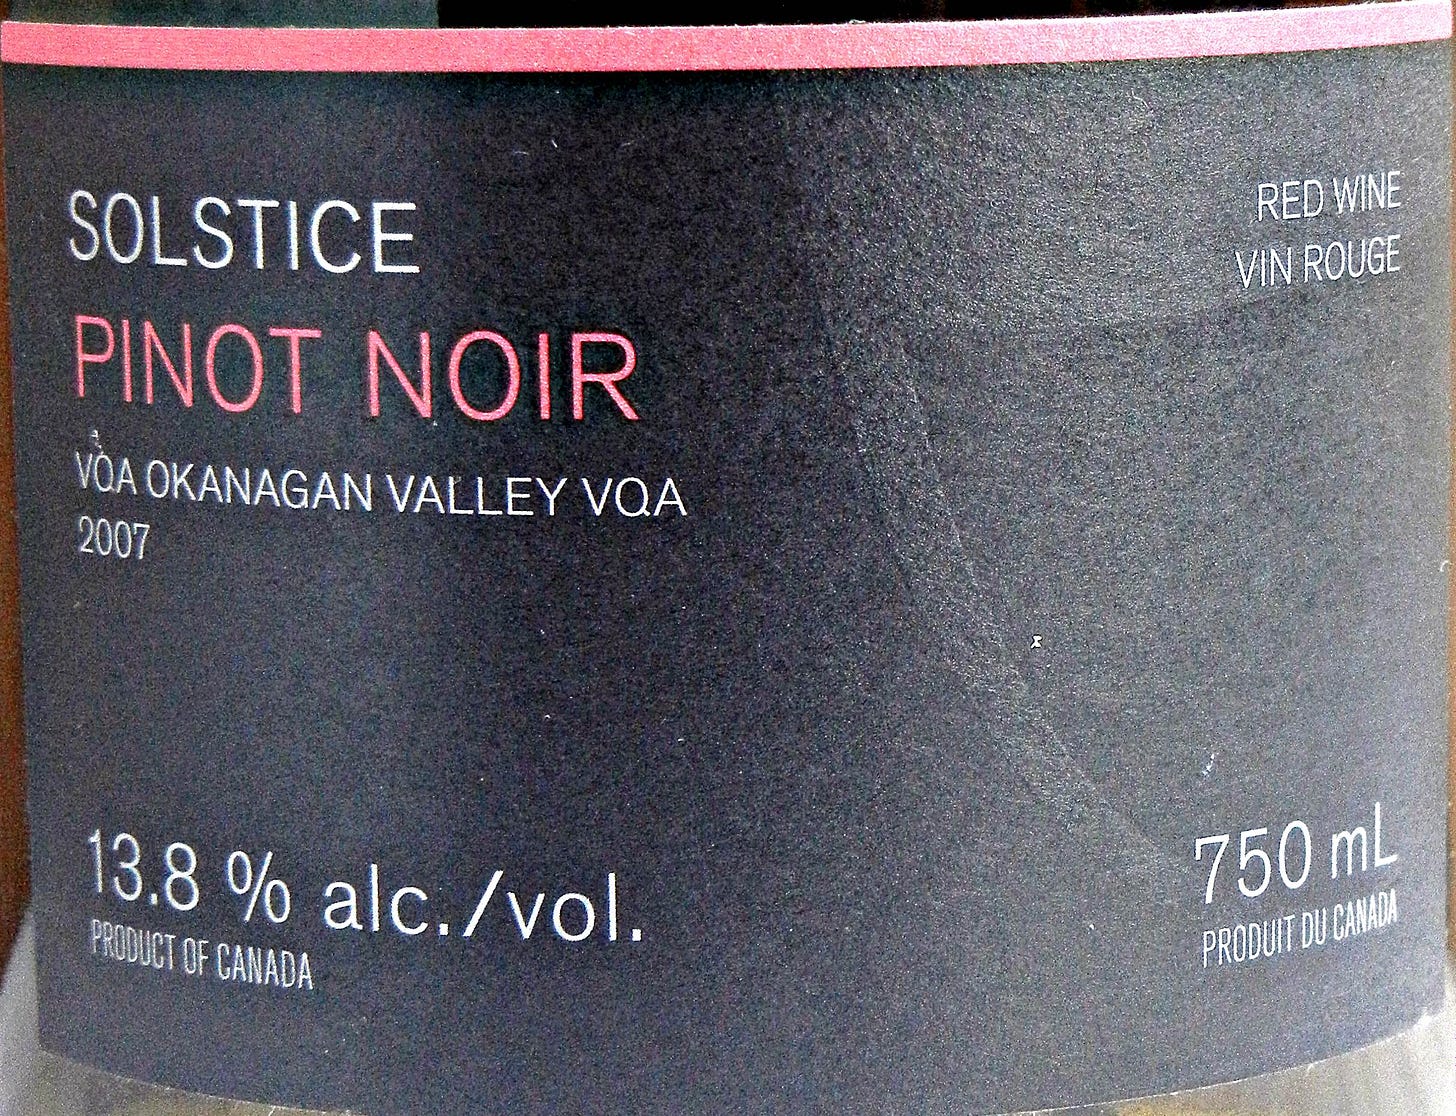 Arrowleaf Solstice Pinot Noir 2007 Label - BC Pinot Noir Tasting Review 23 